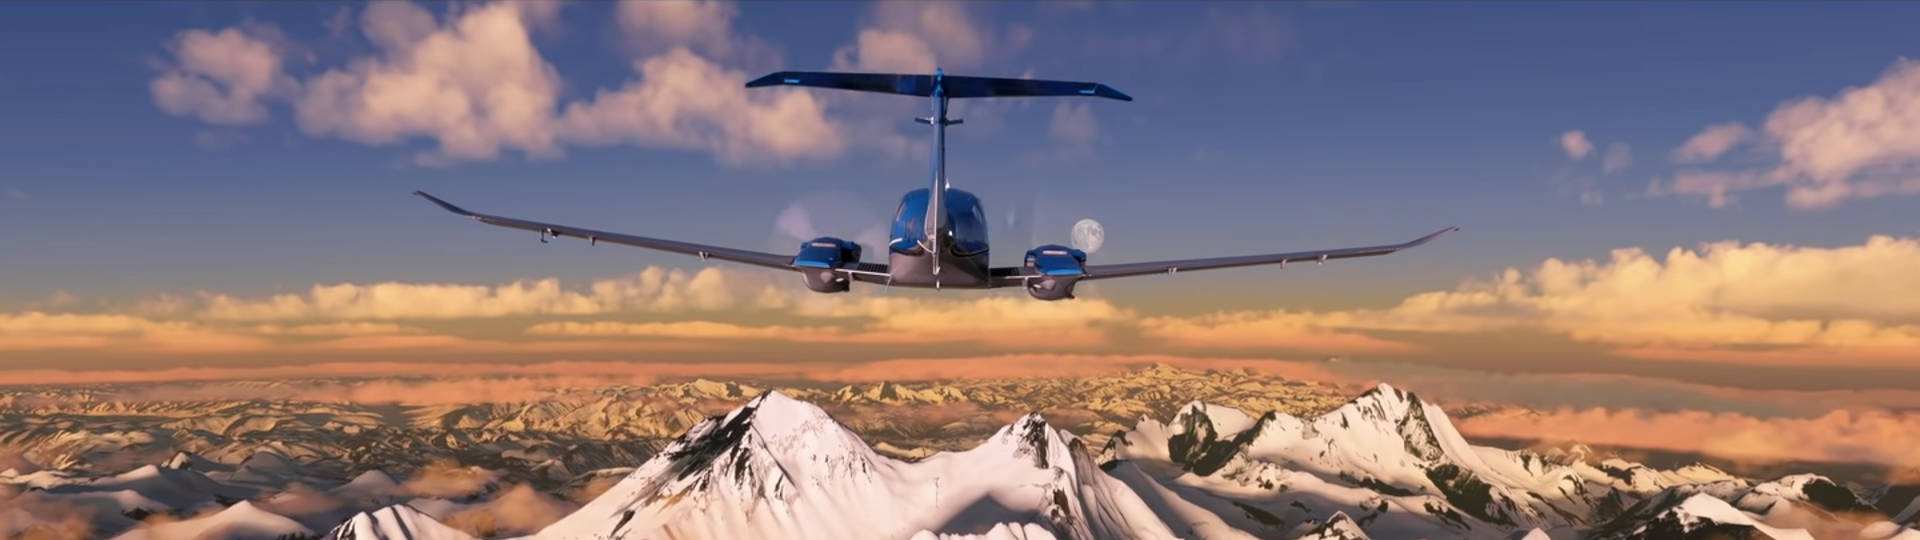 Microsoft Flight Simulator World Update 6 delayed slice